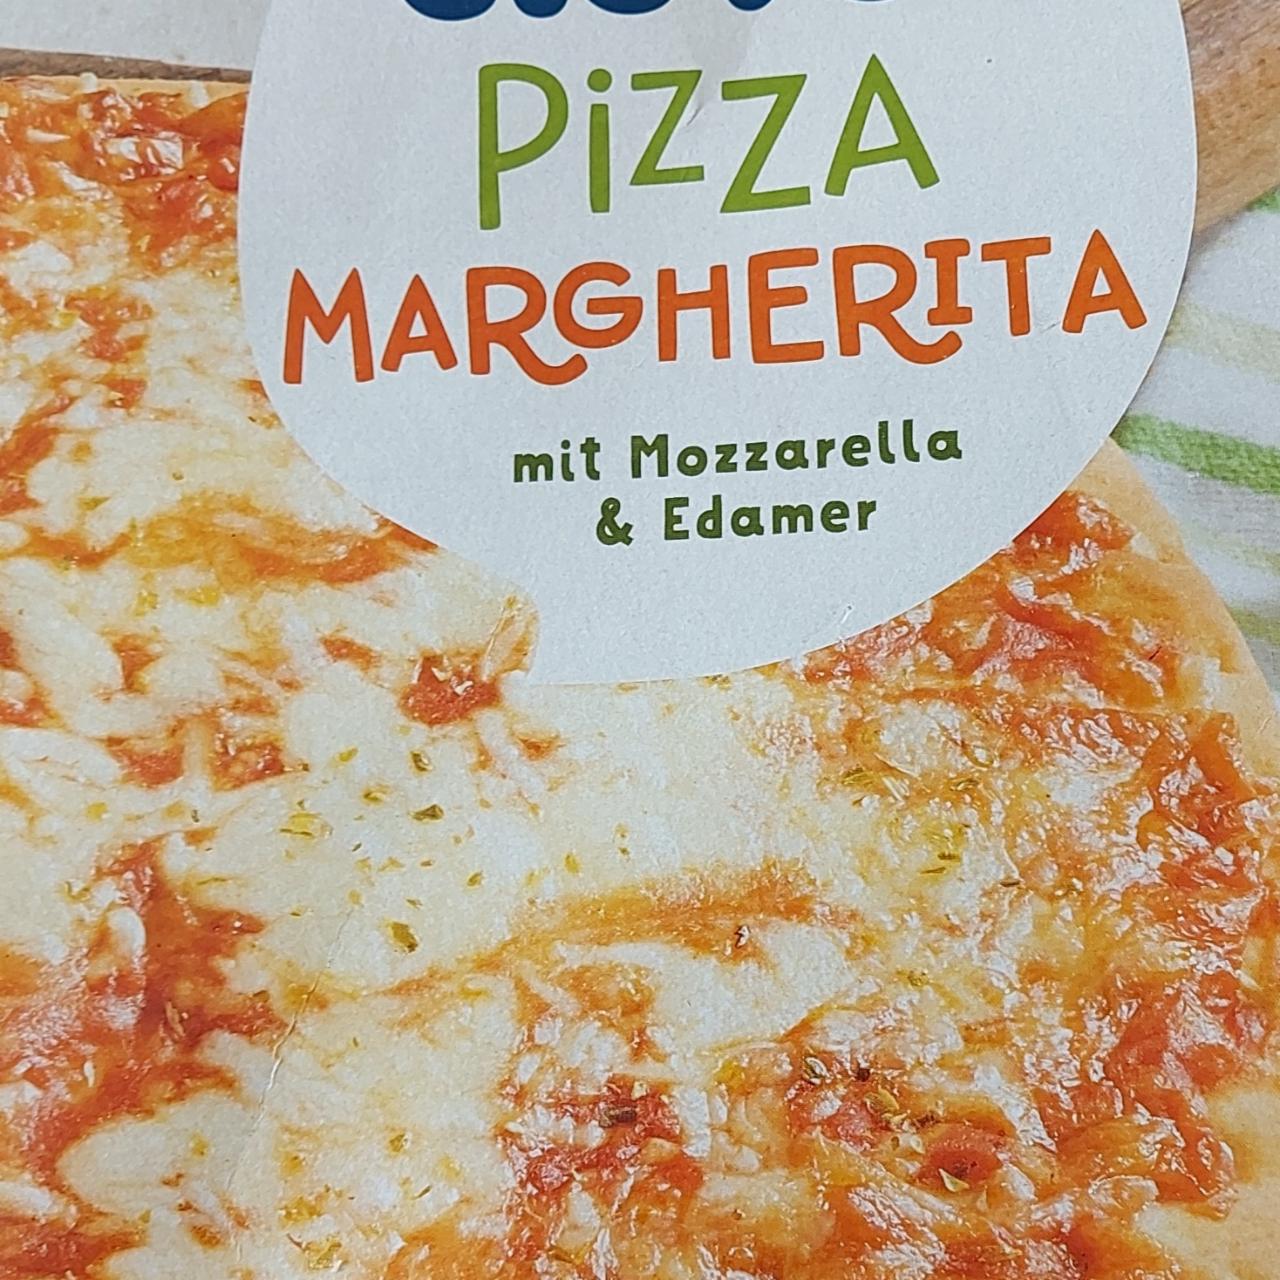 Fotografie - Pizza margherita mit mozzarella & edamer Clever